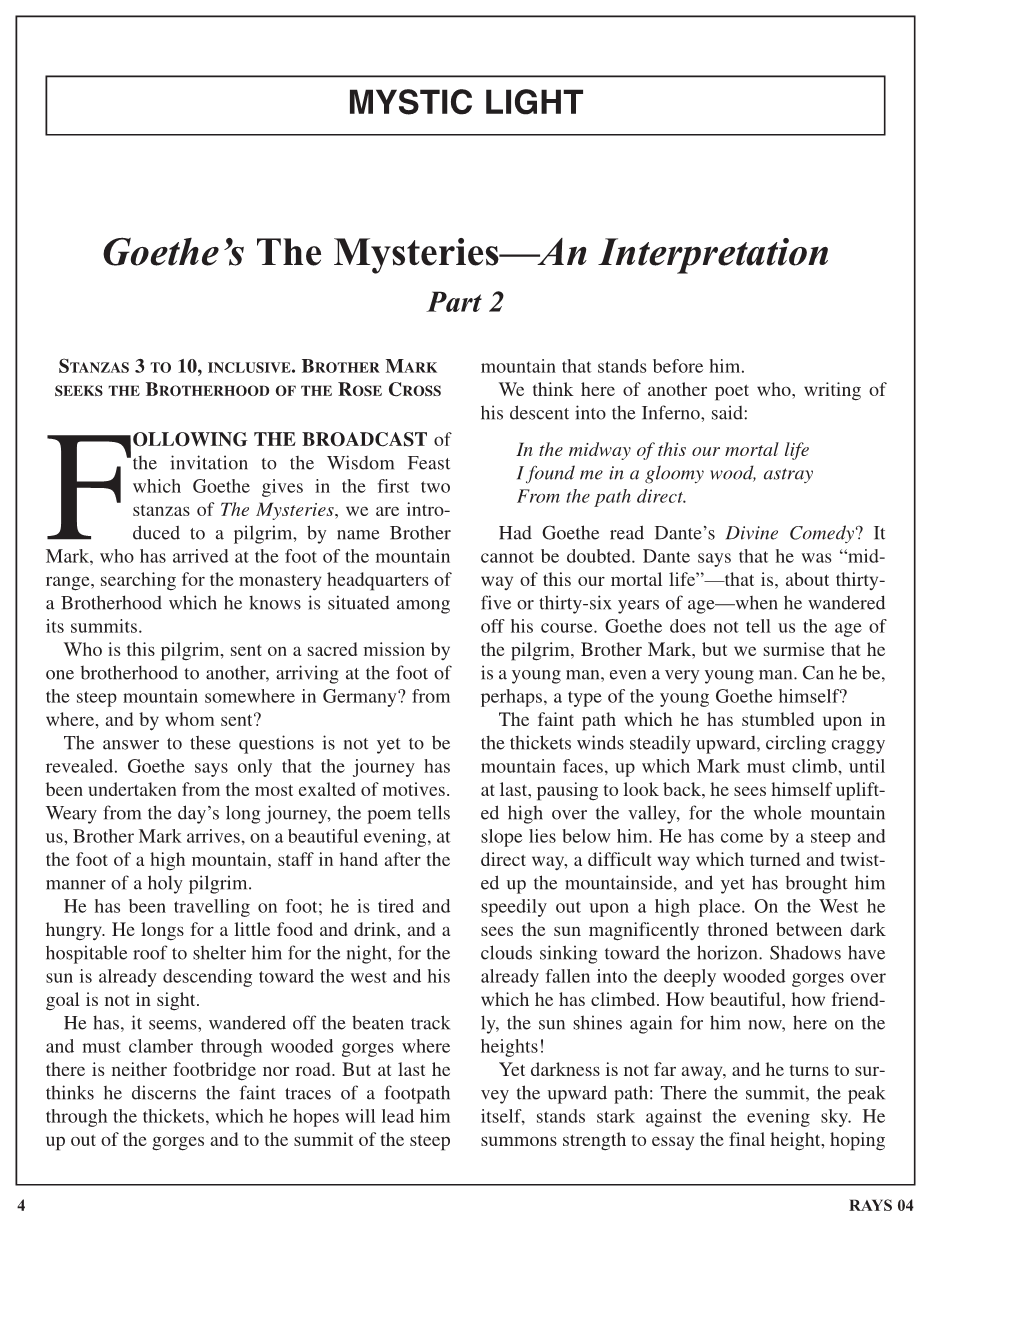 Goethe's the Mysteries—An Interpretation